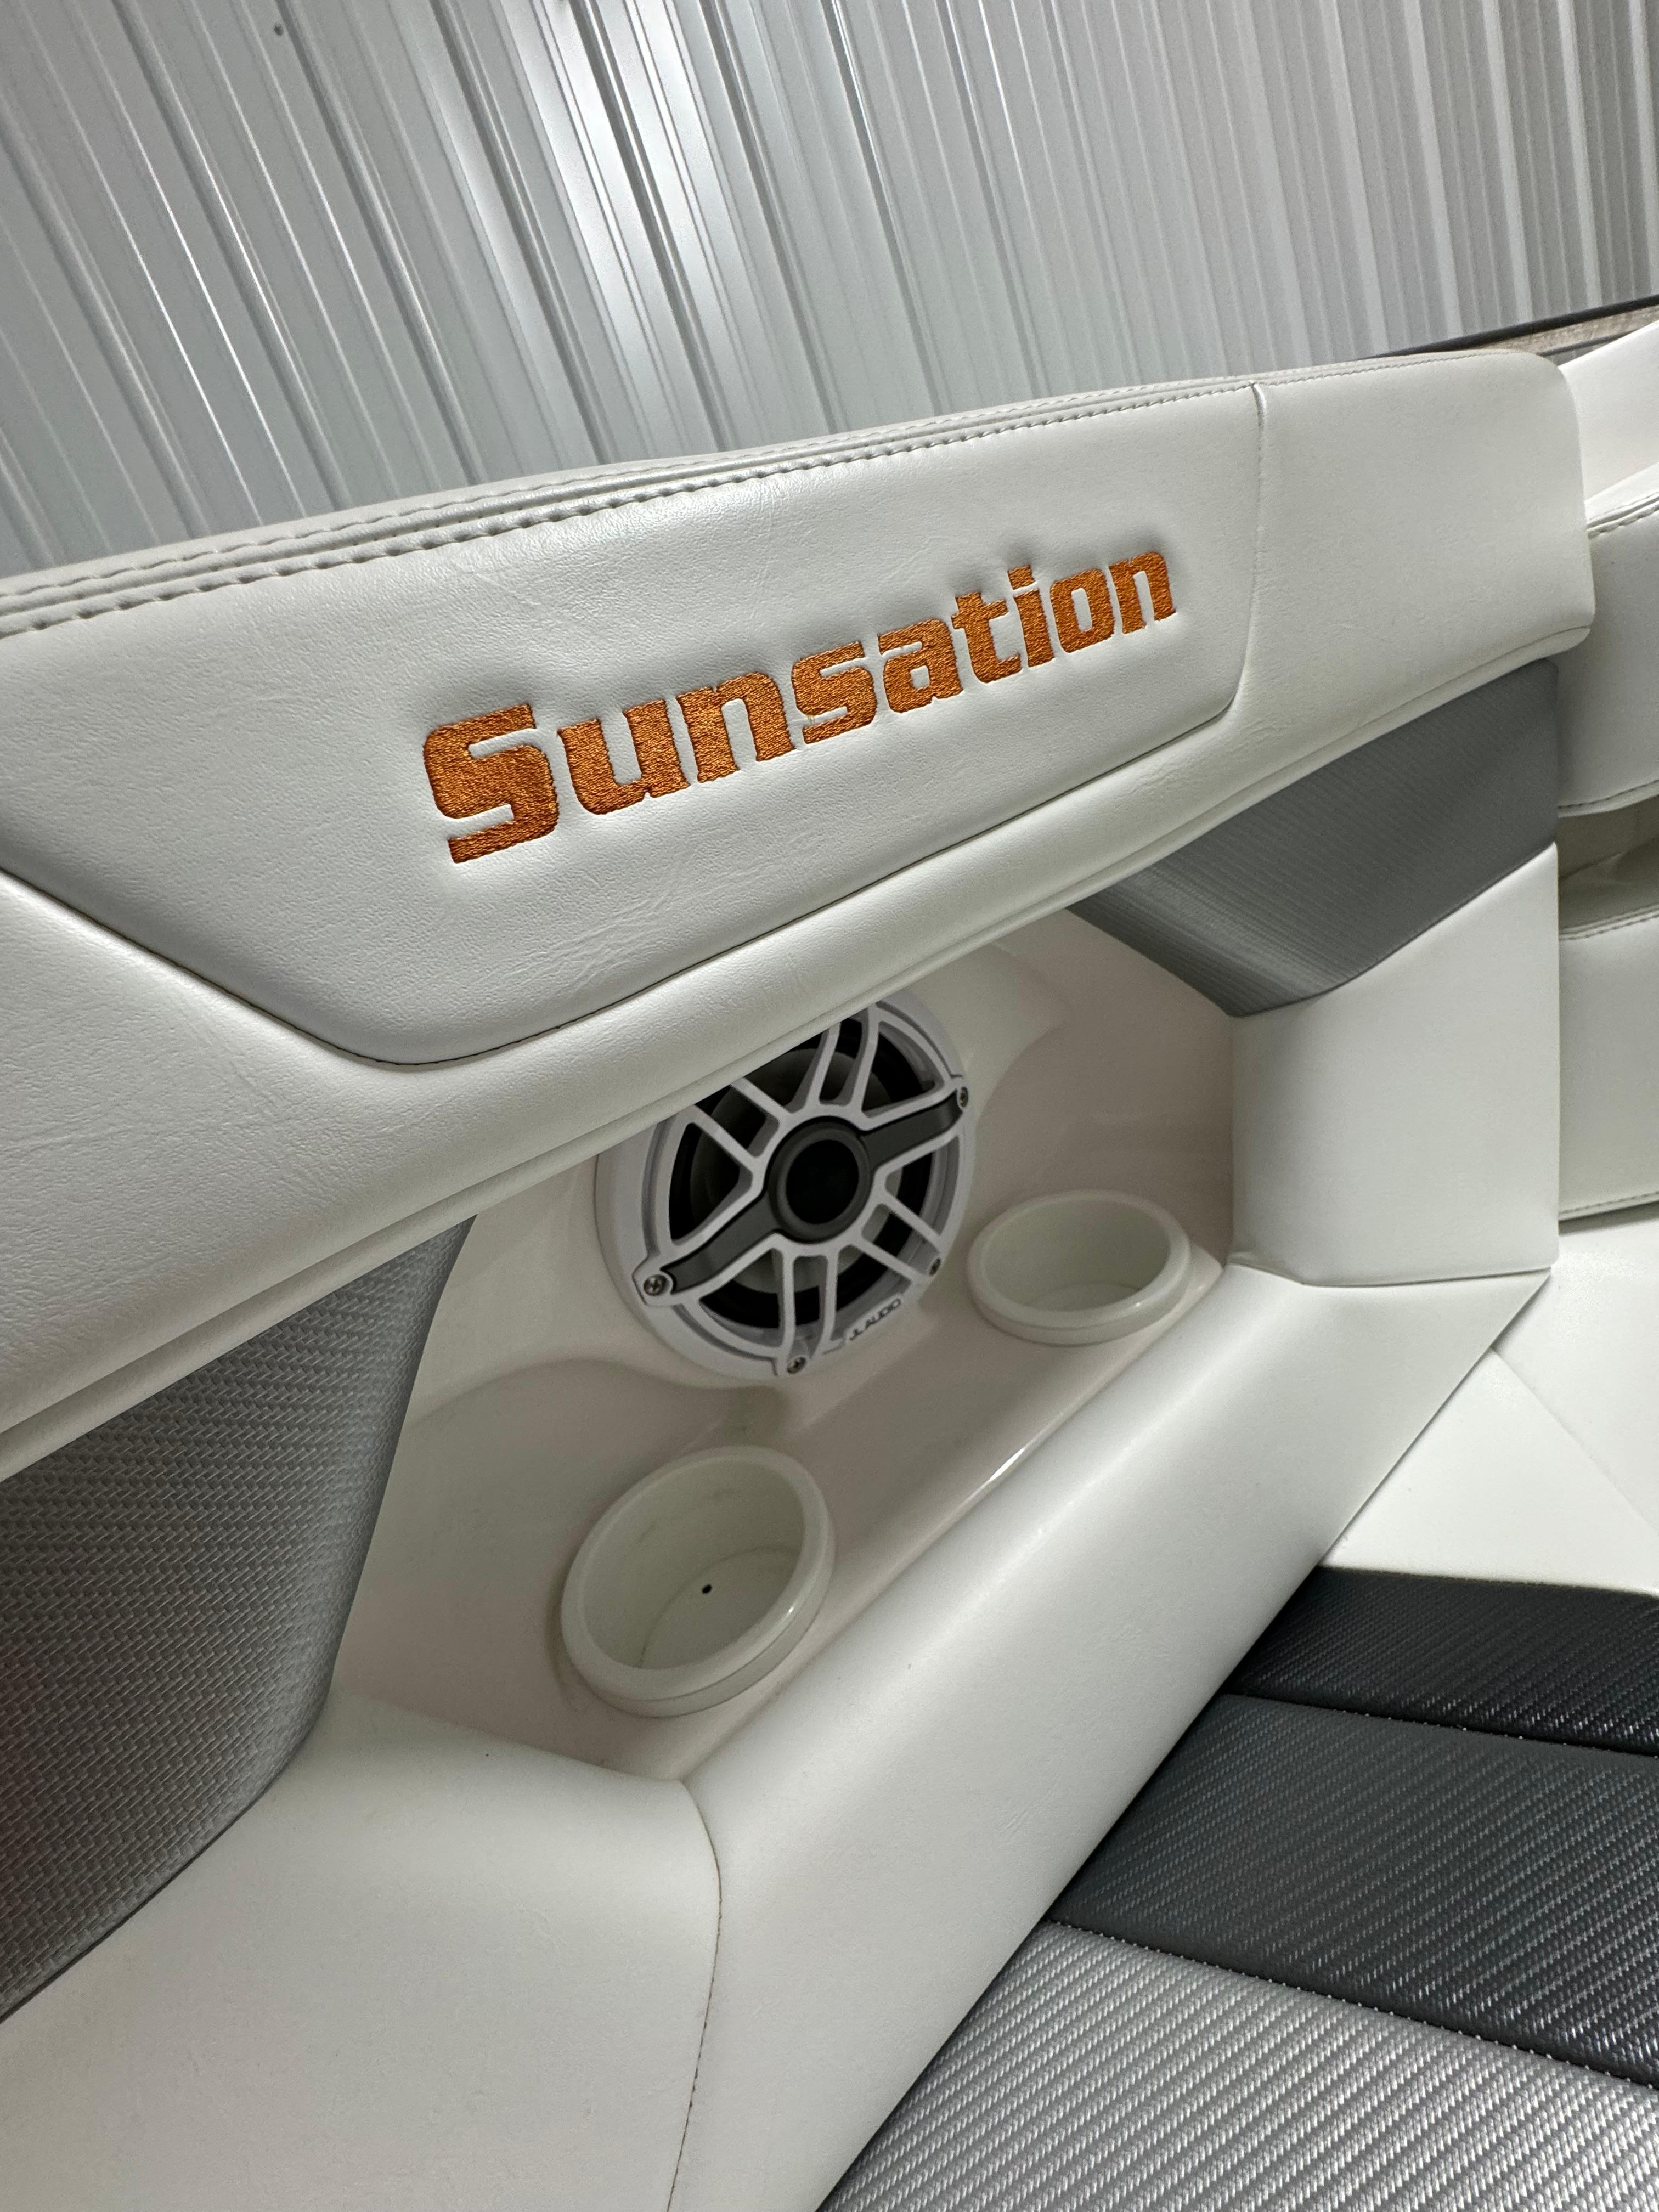 2015 Sunsation 288